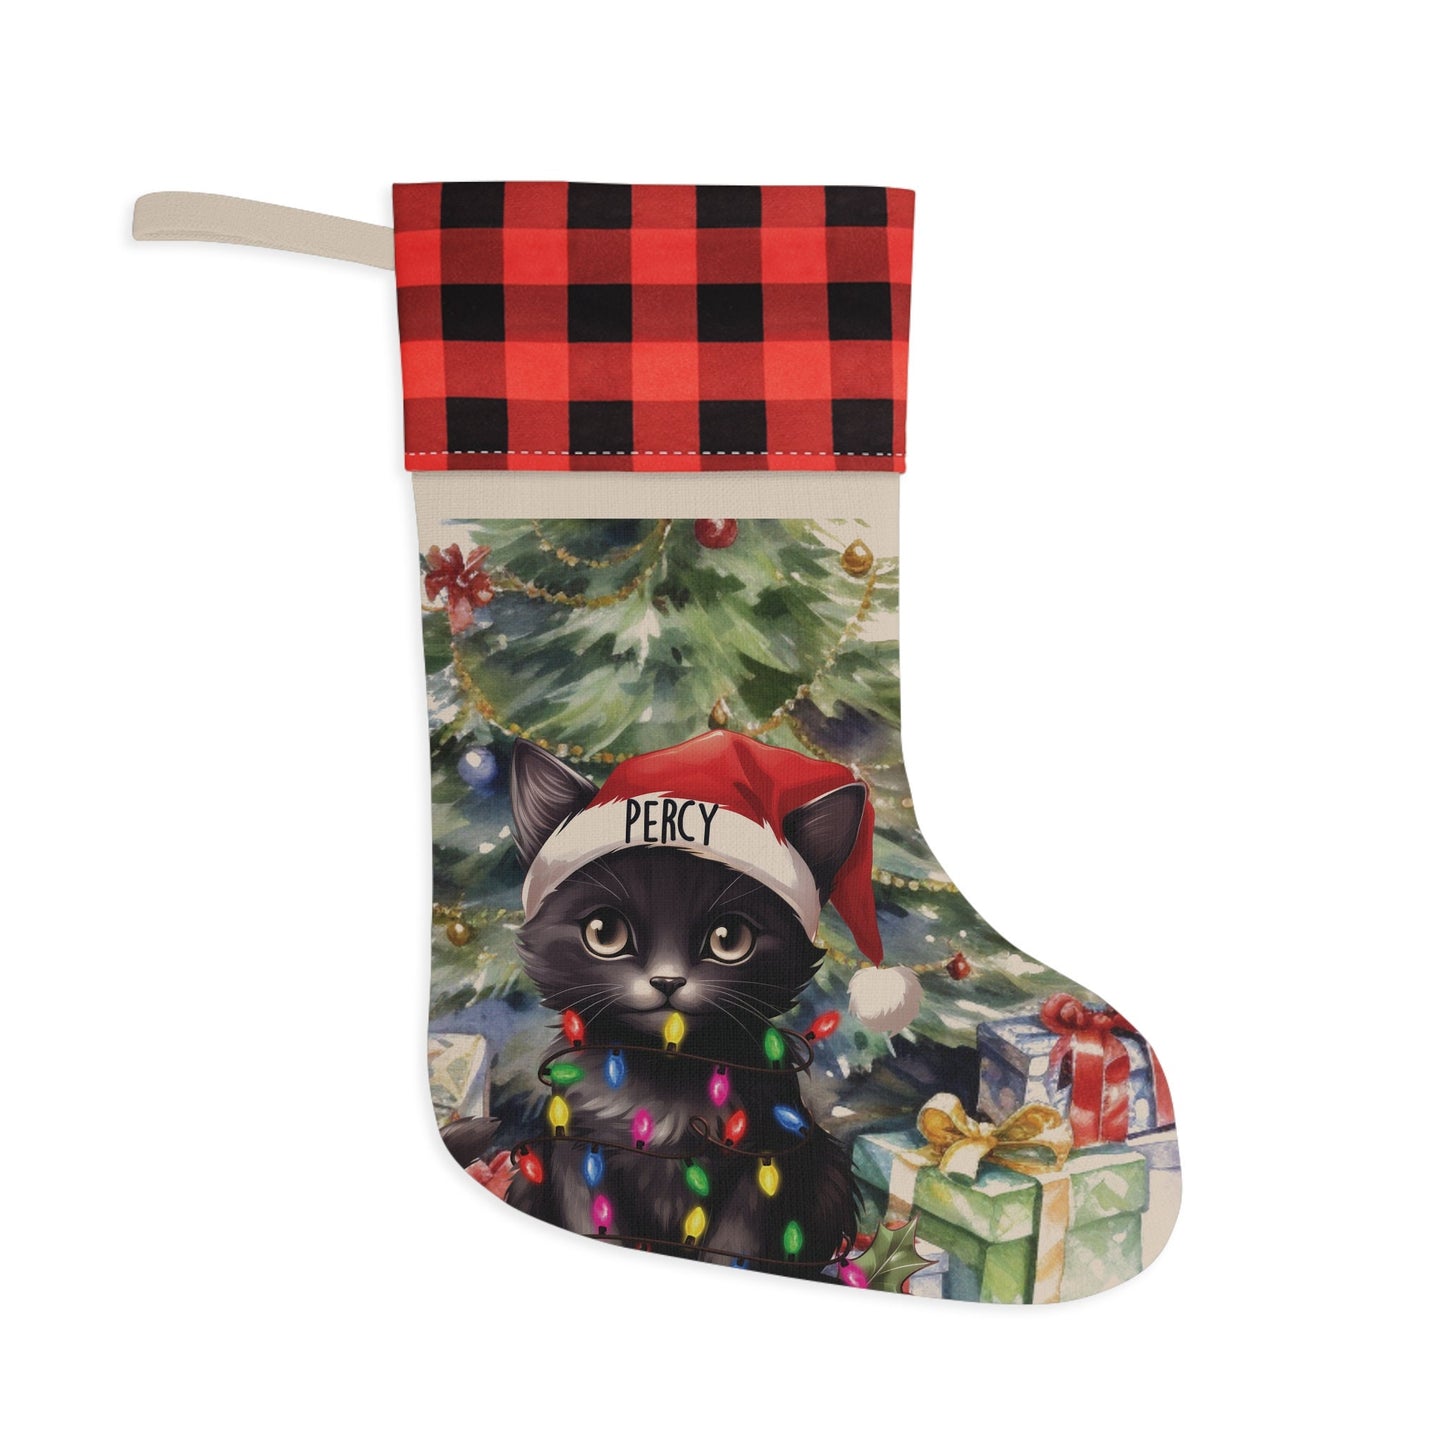 Black Cat Christmas Pet Stockings, Custom Cat Stocking, Cat Lover Gifts, Christmas Home Decor, Christmas Decoration, Christmas Stocking